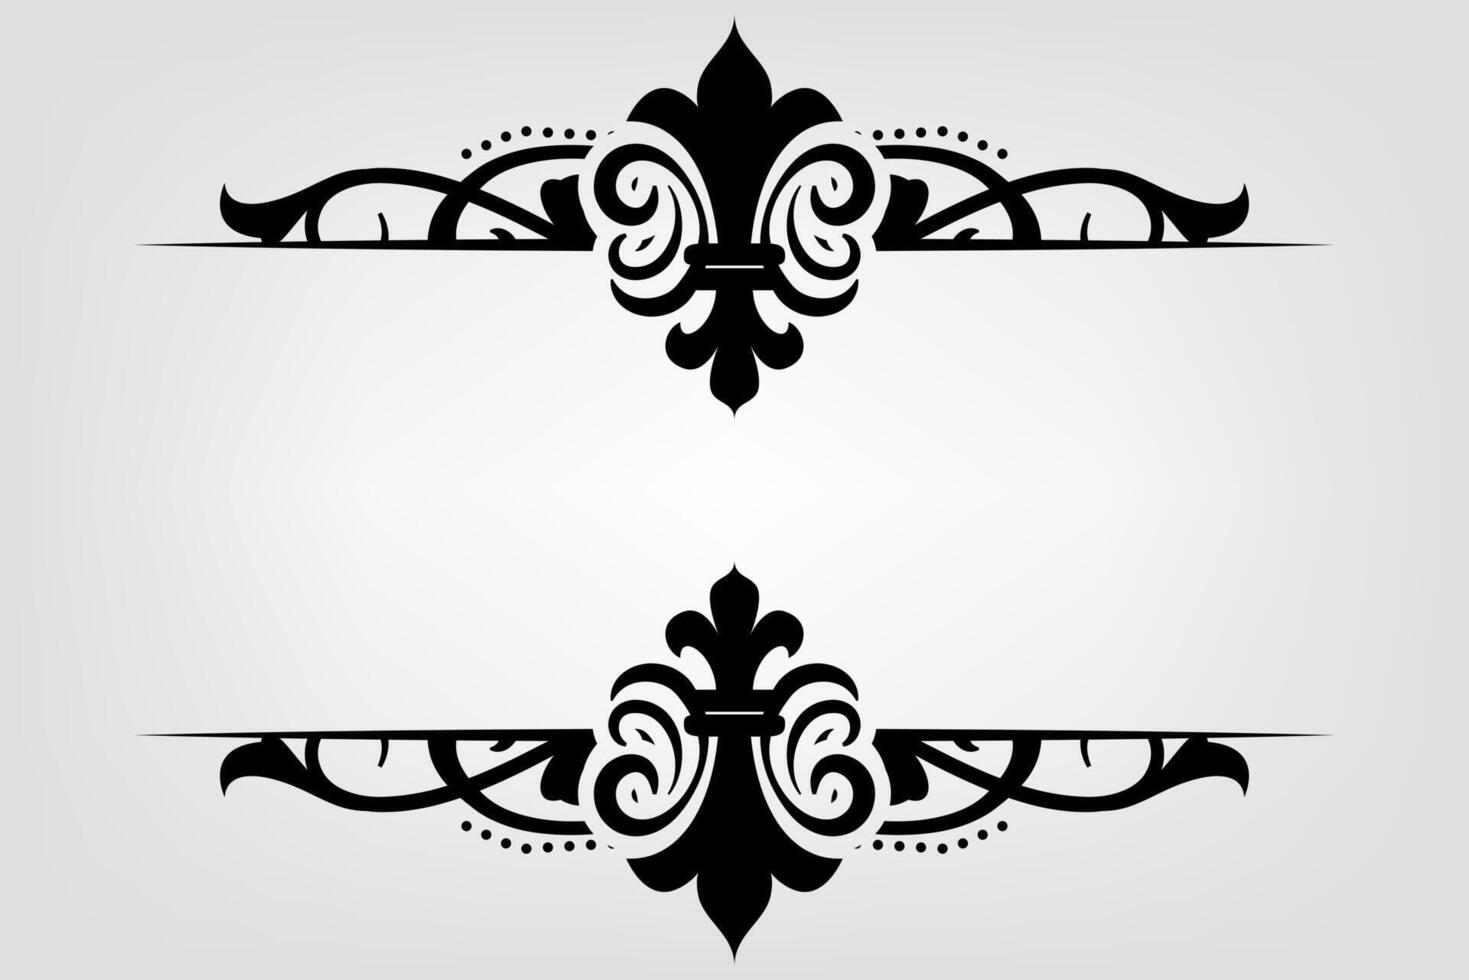 texto separador barroco decorar divisor libro tipografía ornamento diseño elementos Clásico divisor formas frontera ilustración vector